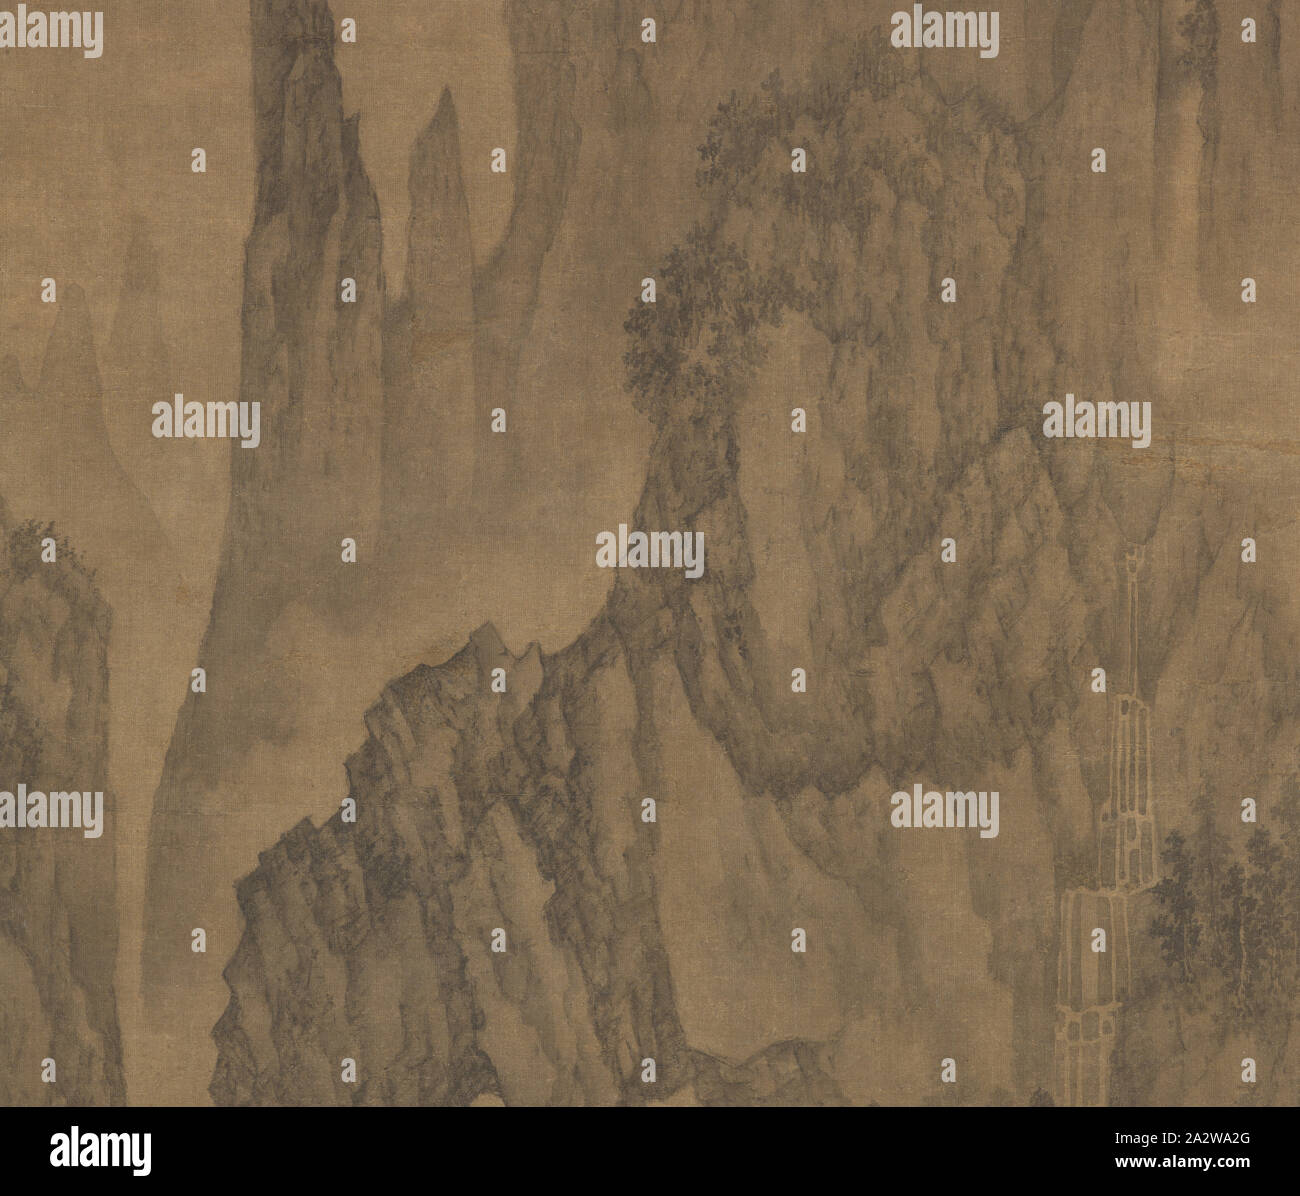 Un migliaio di picchi e di una miriade di anfratti, Wu Bin (cinese), dinastia Ming, periodo, Wanli, 1617, inchiostro su seta, 47-1/2 x 15-3/4 in. (Immagine) 87-3/4 x 21-13/16 in. (Generale), firmato: Zhiyin Wu Bin guarnizioni: Wu Bin zi yue Wenzhung; Yizhi qi, Arte Asiatica Foto Stock